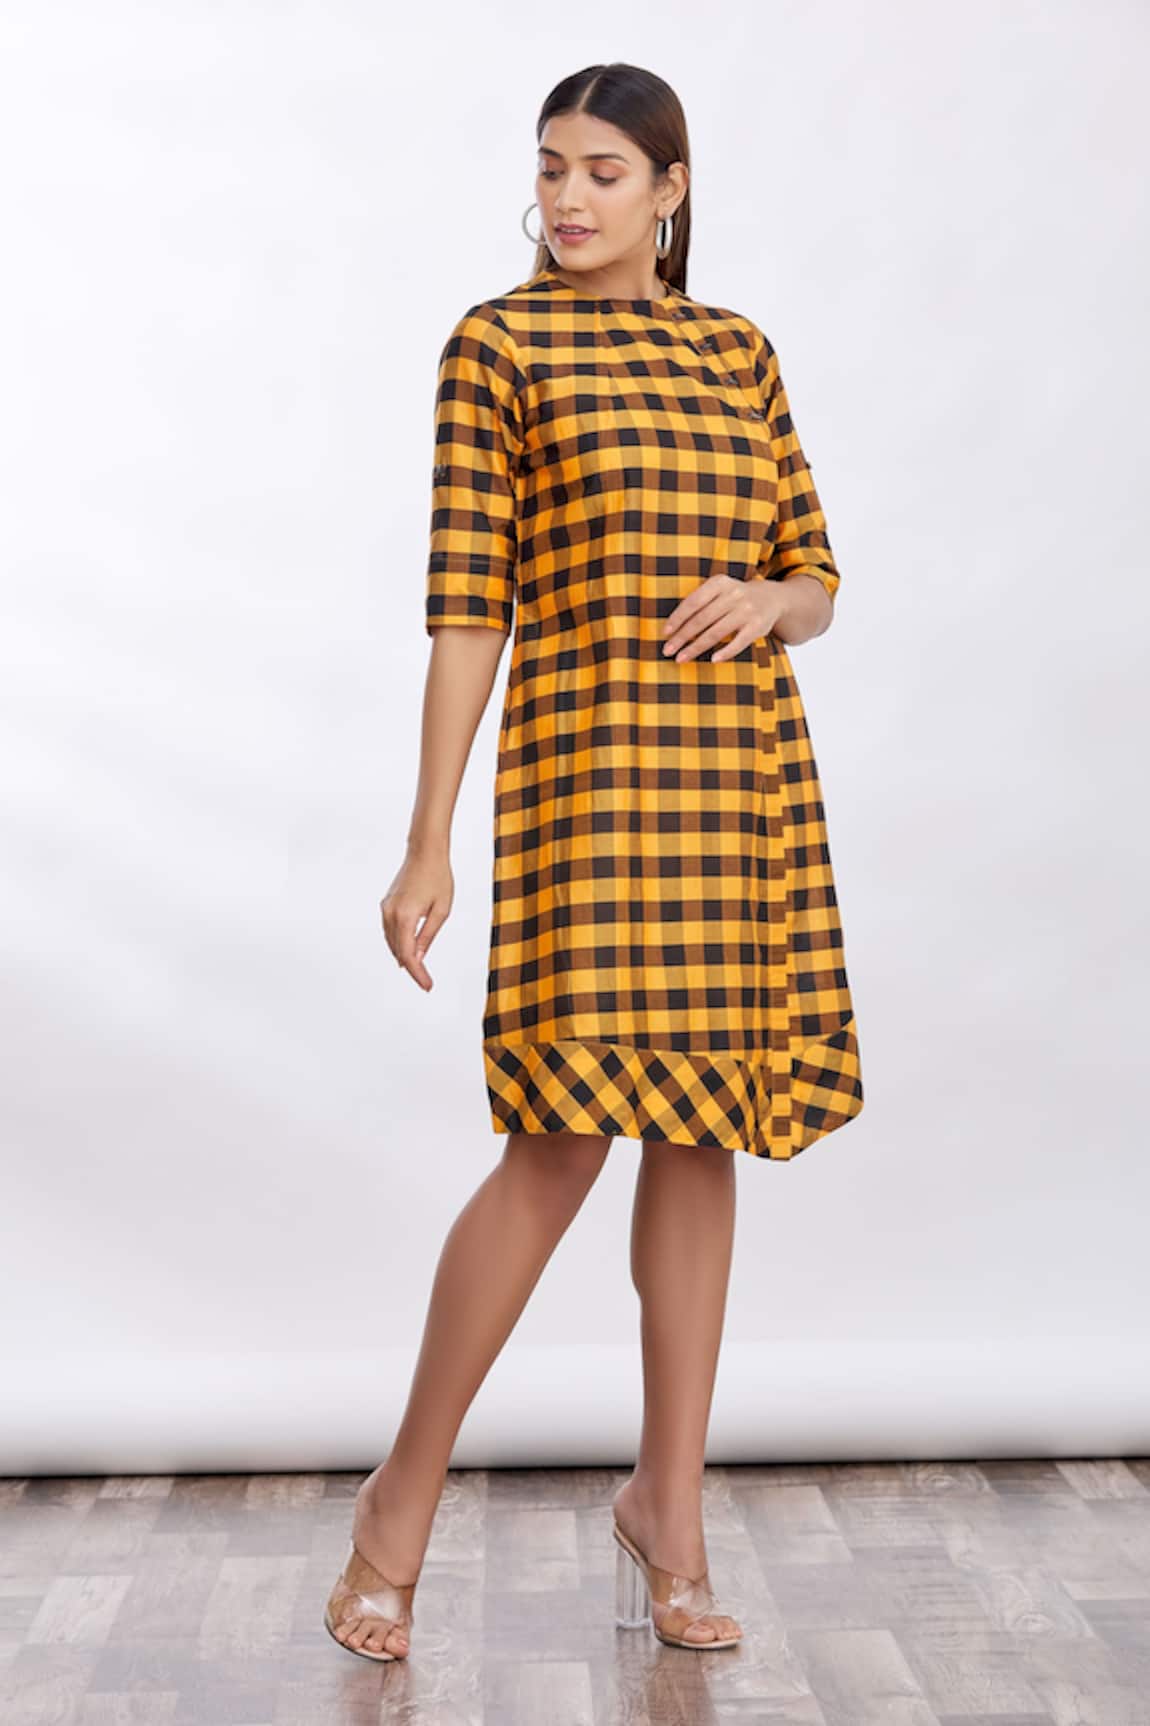 Mathili's Checkered Dress